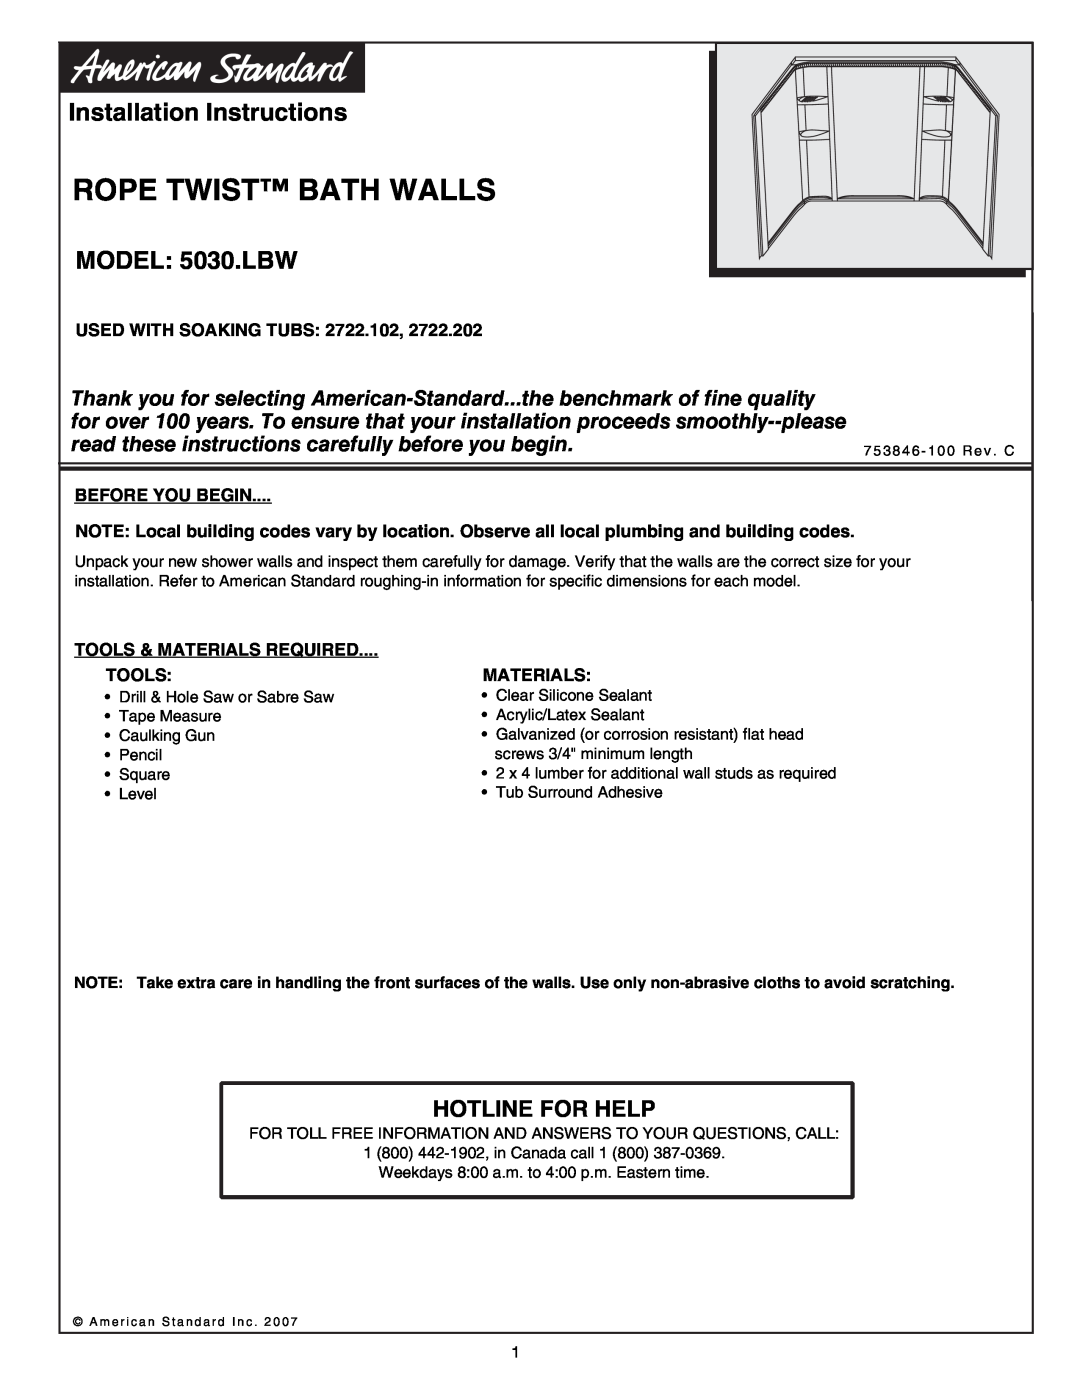 American Standard Rope Twist Bath Walls installation instructions Installation Instructions, MODEL: 5030.LBW 